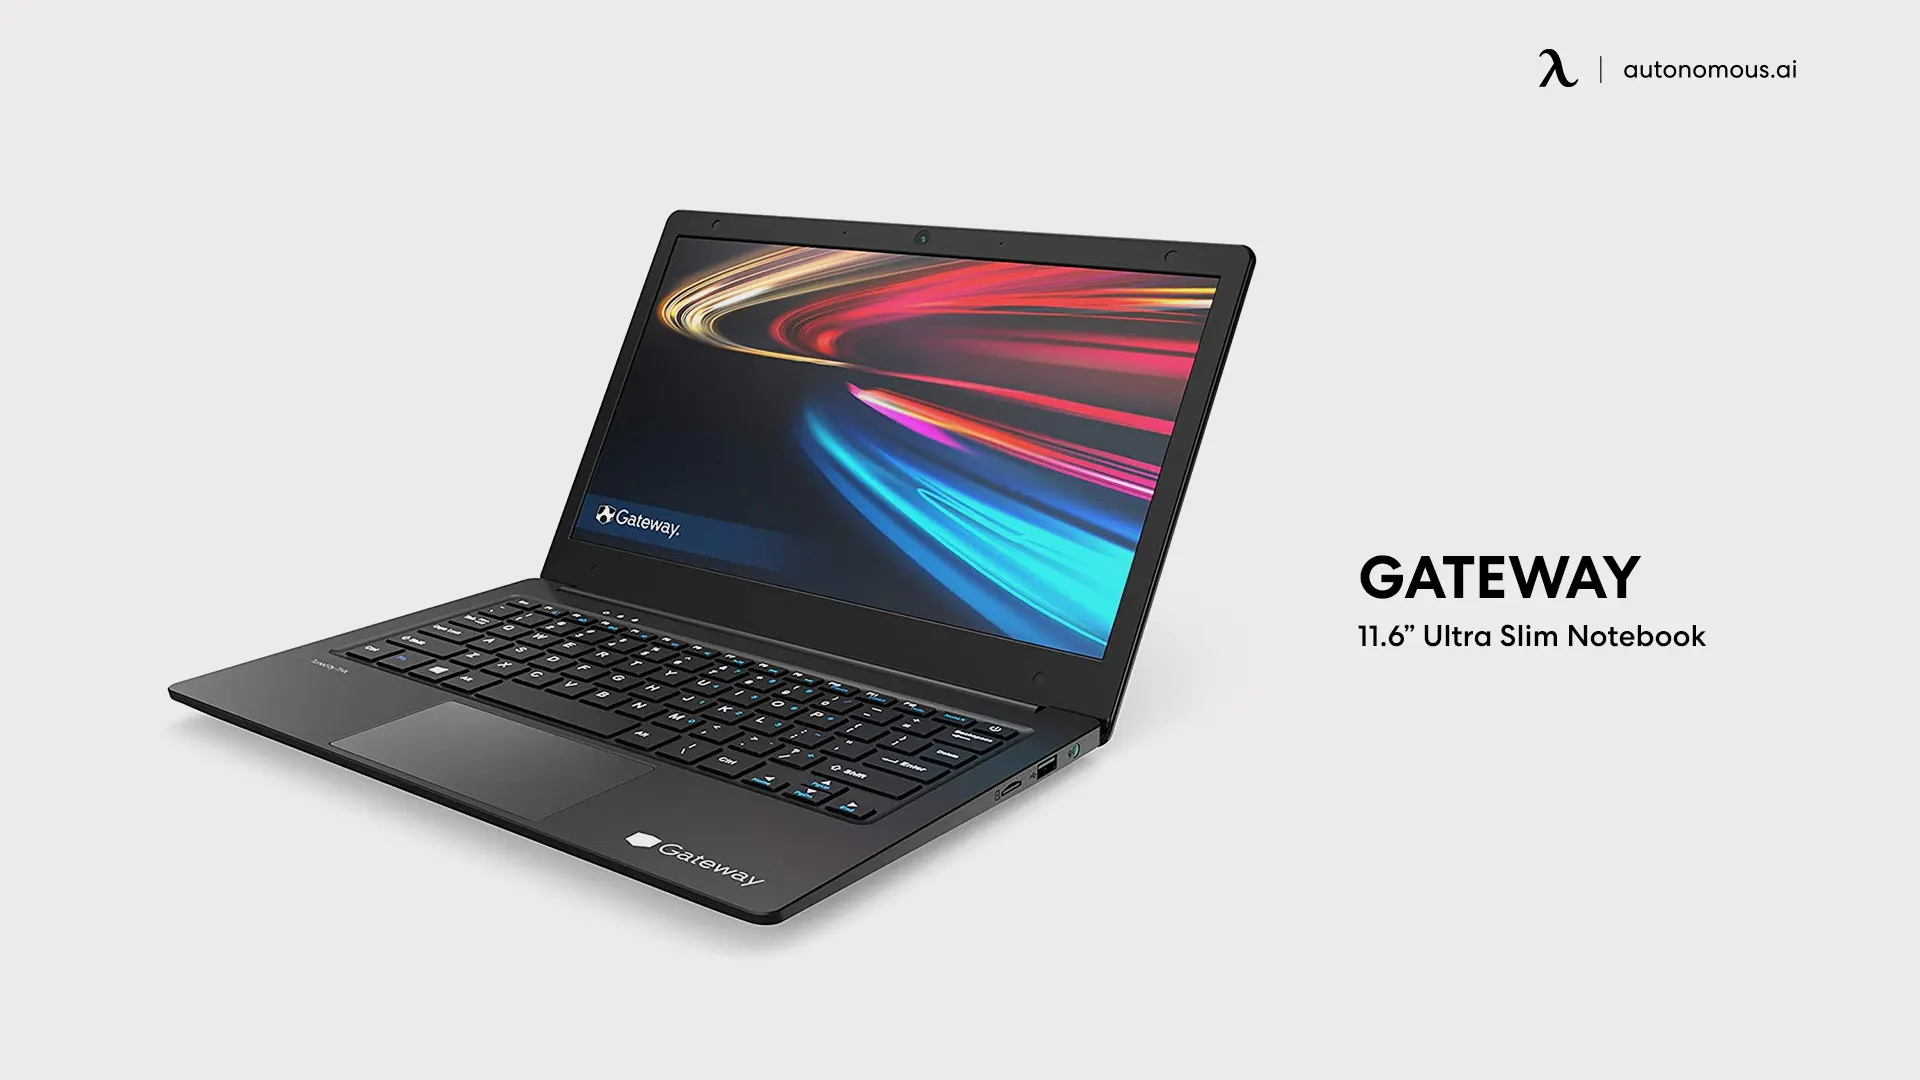 Gateway 11.6” Ultra Slim Notebook